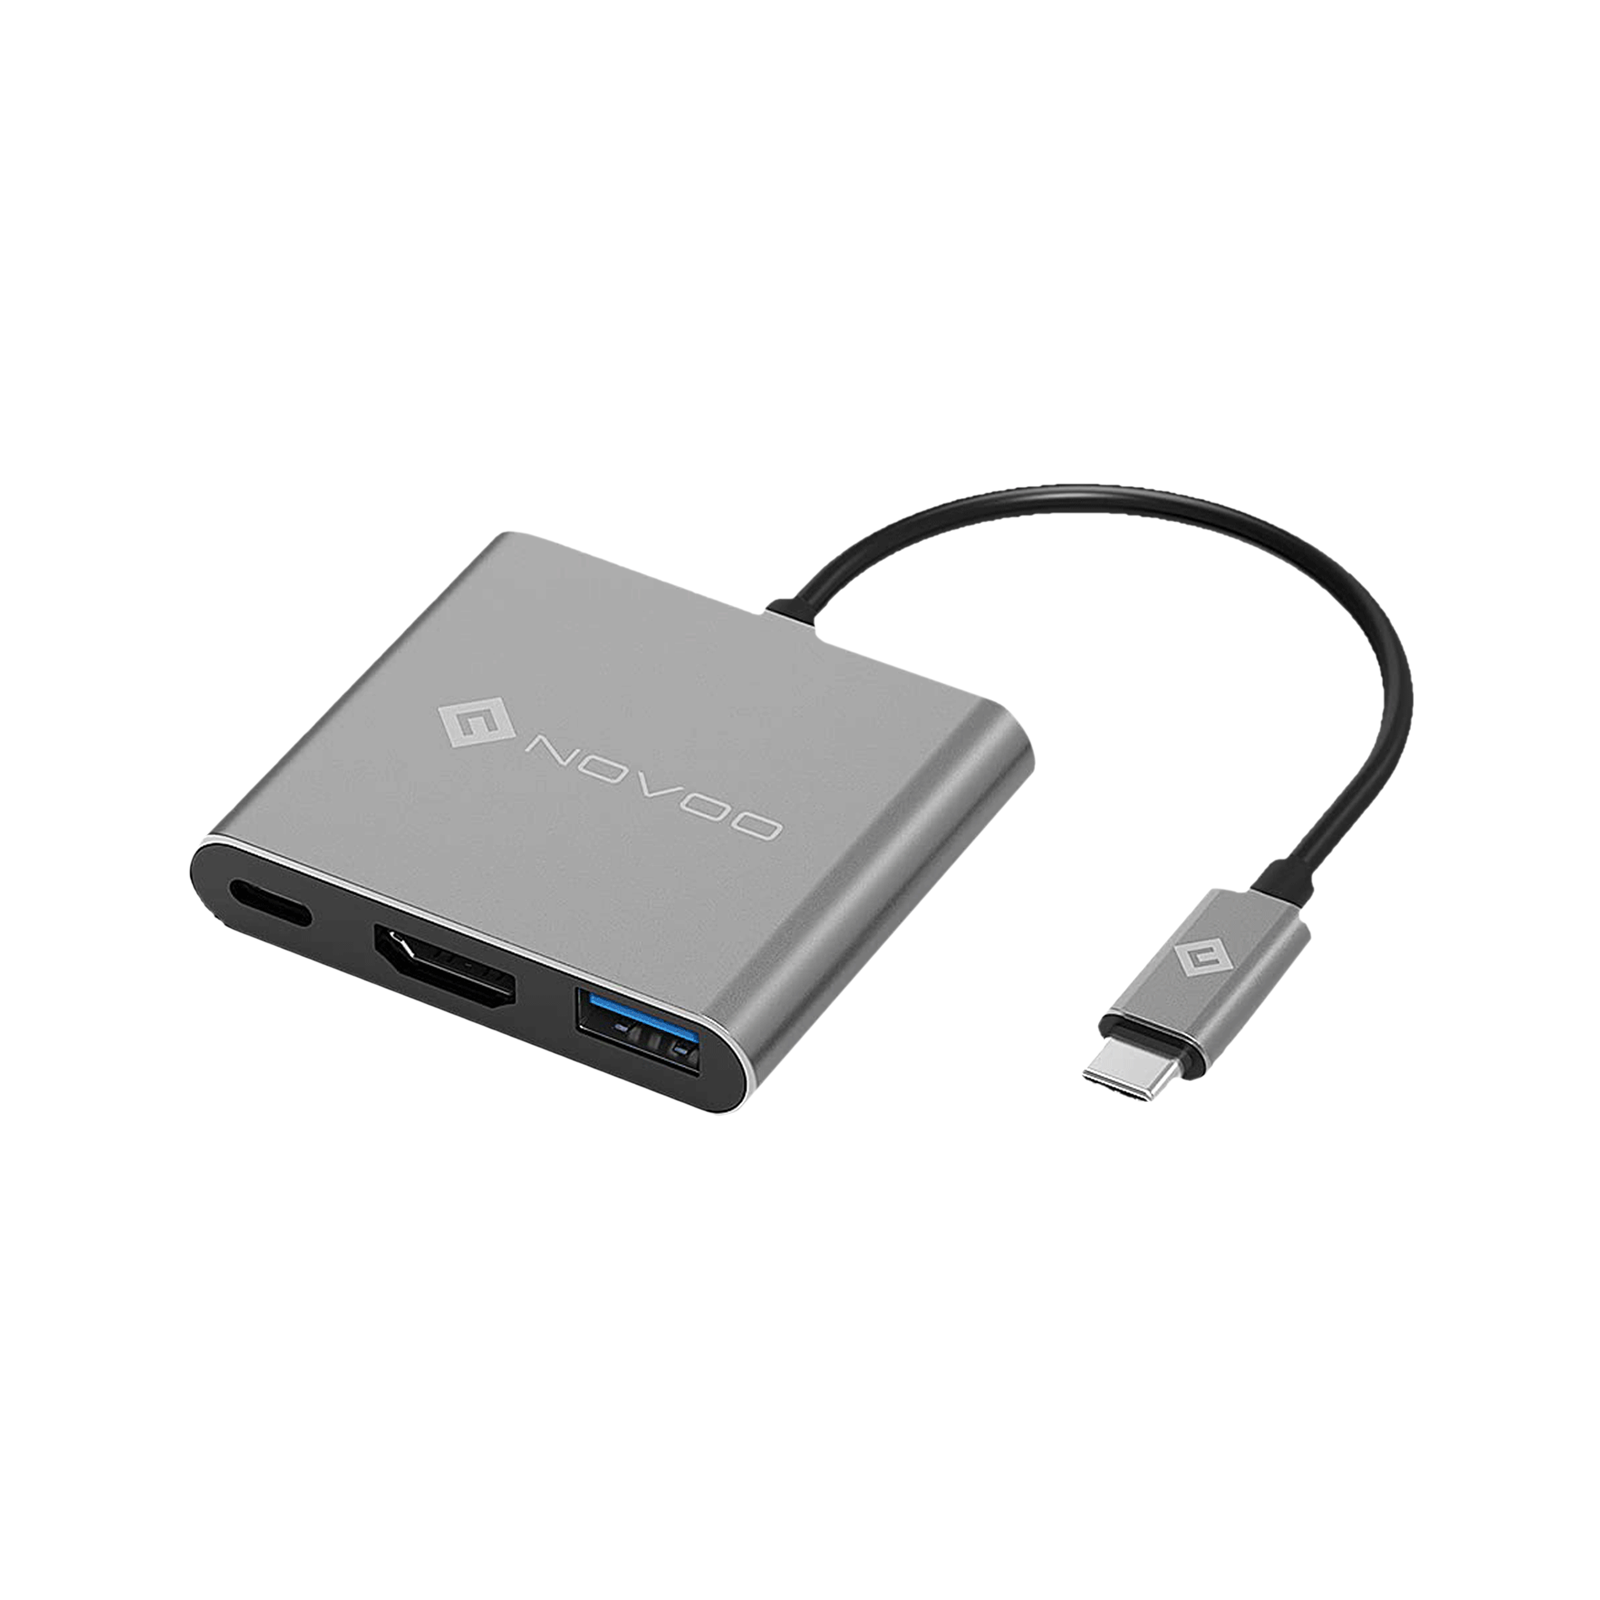 Buy Novoo 3-in-1 USB 3.0 Type C to USB 3.0 C, 3.0 Type A, HDMI A USB Hub (Supports 4K Resolution, Dark Grey) Online Croma